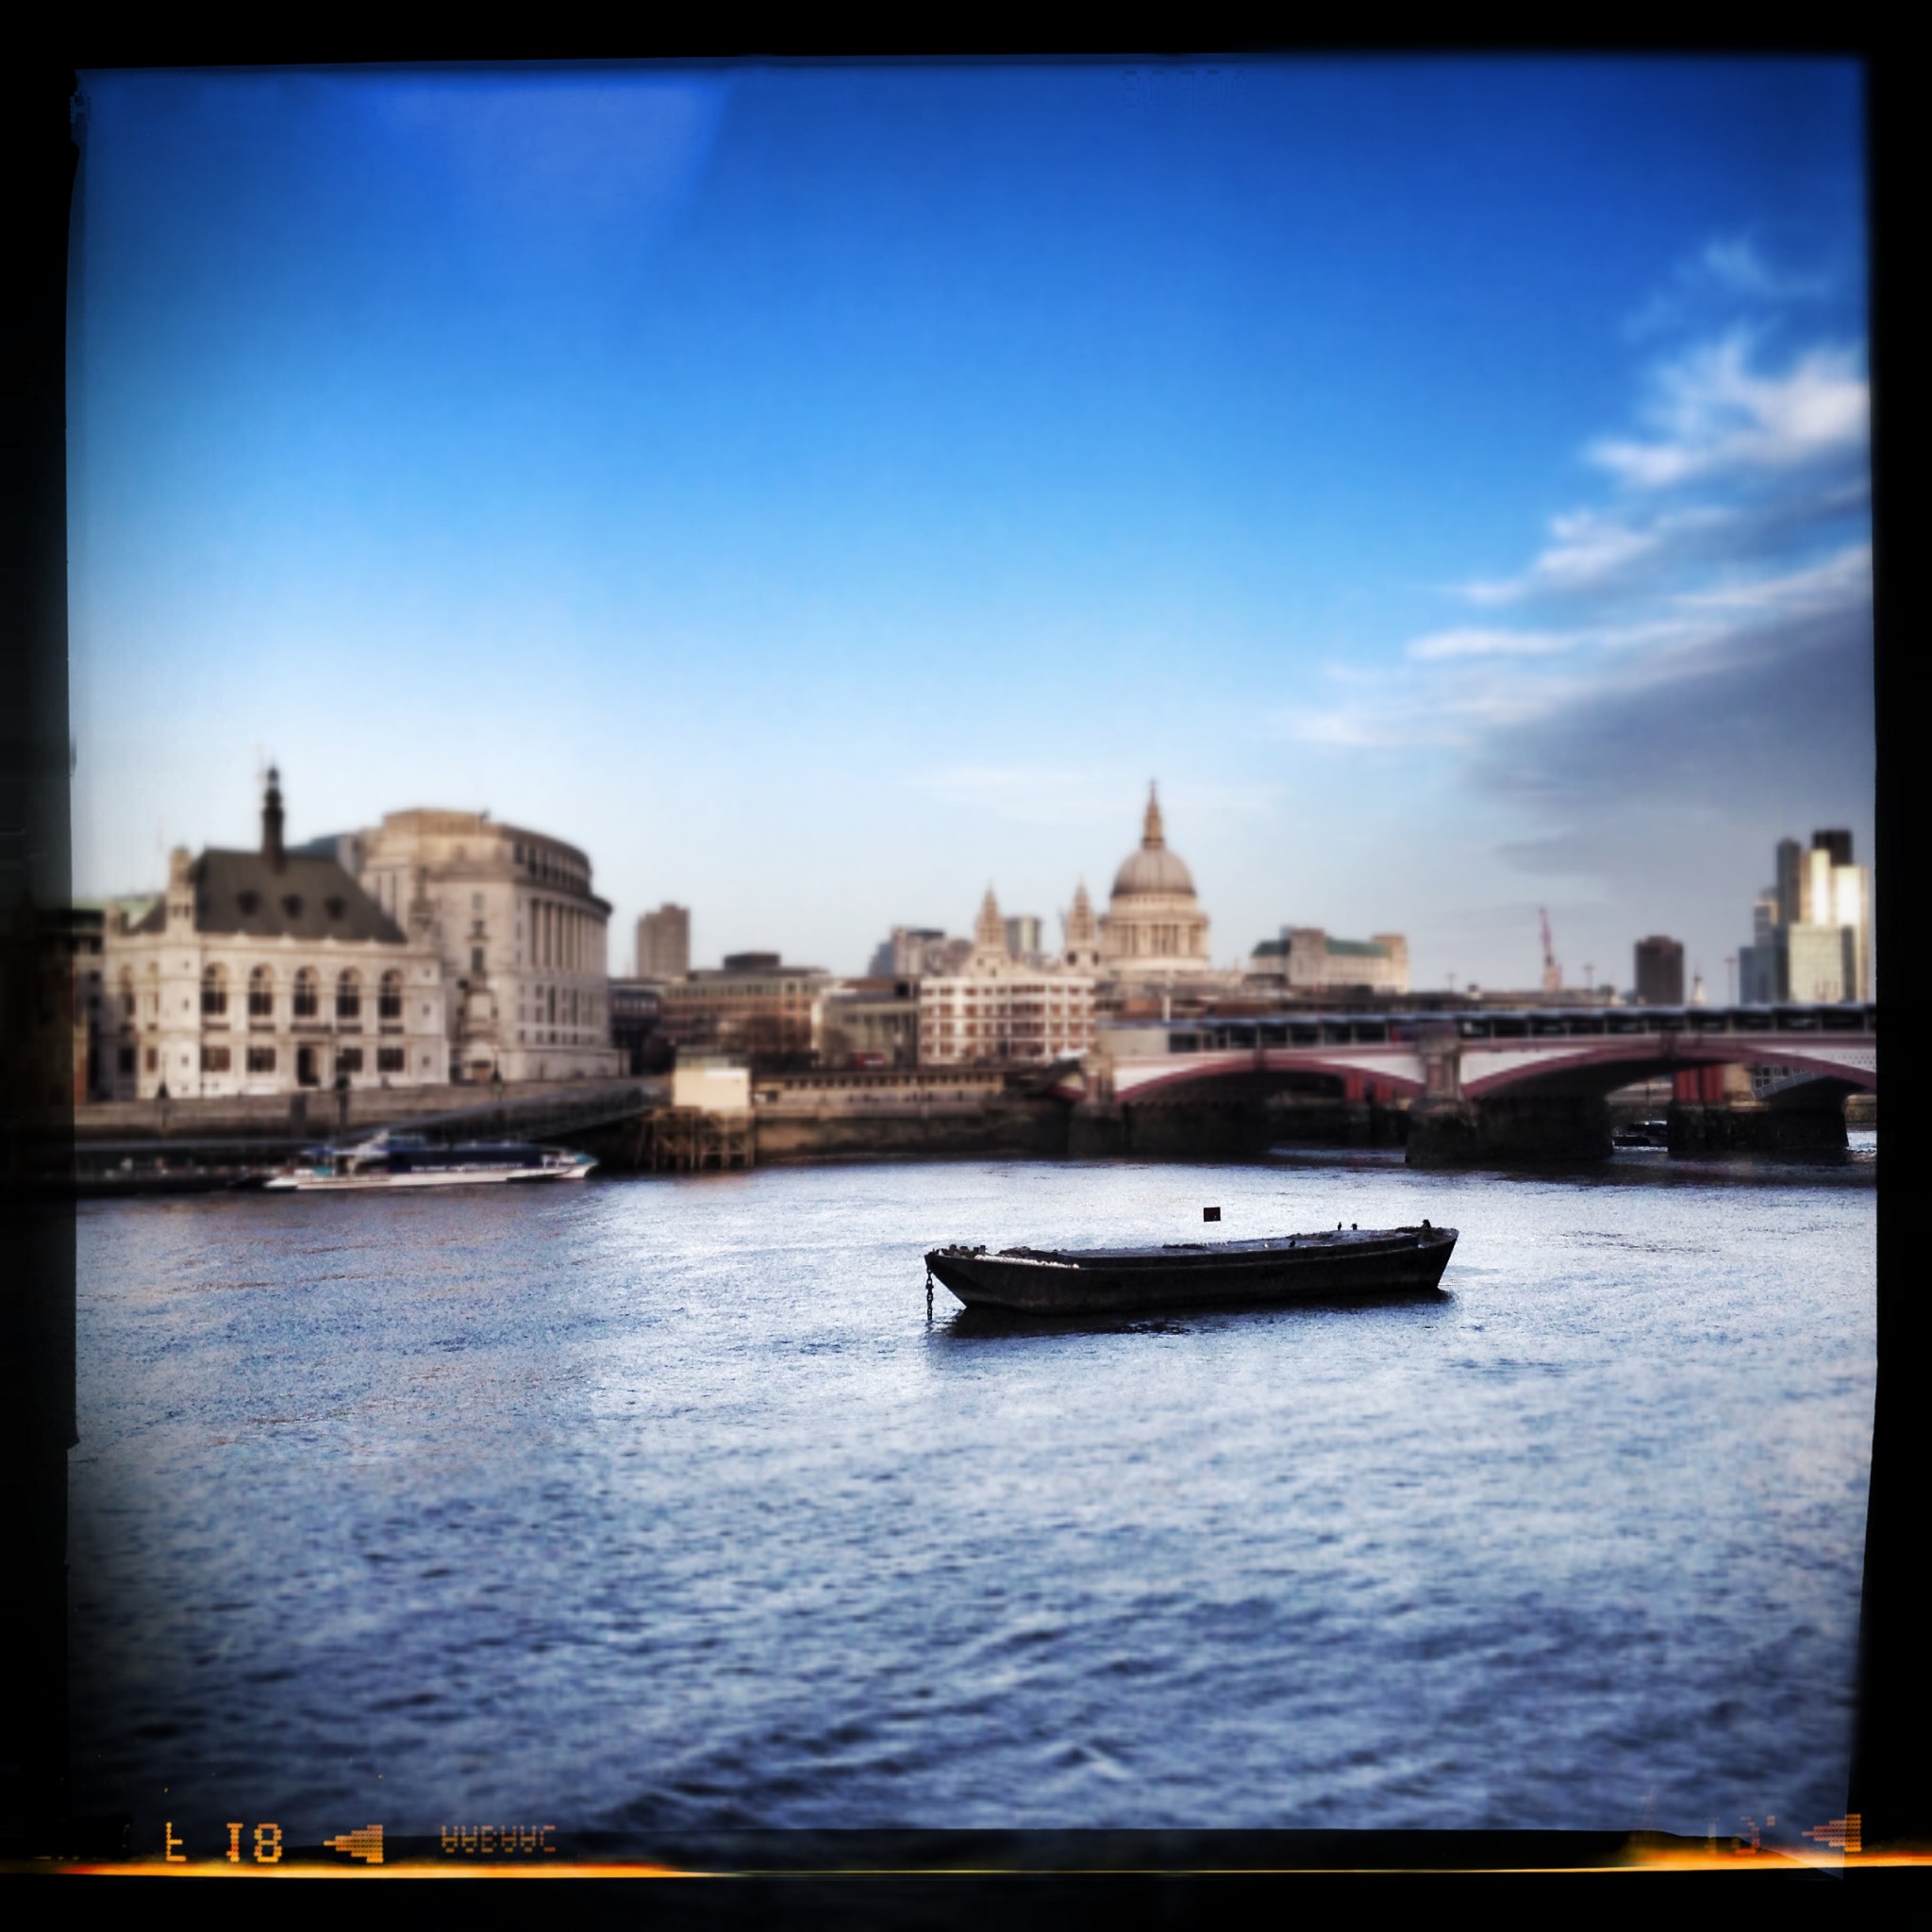 London thames by Laurent Reich